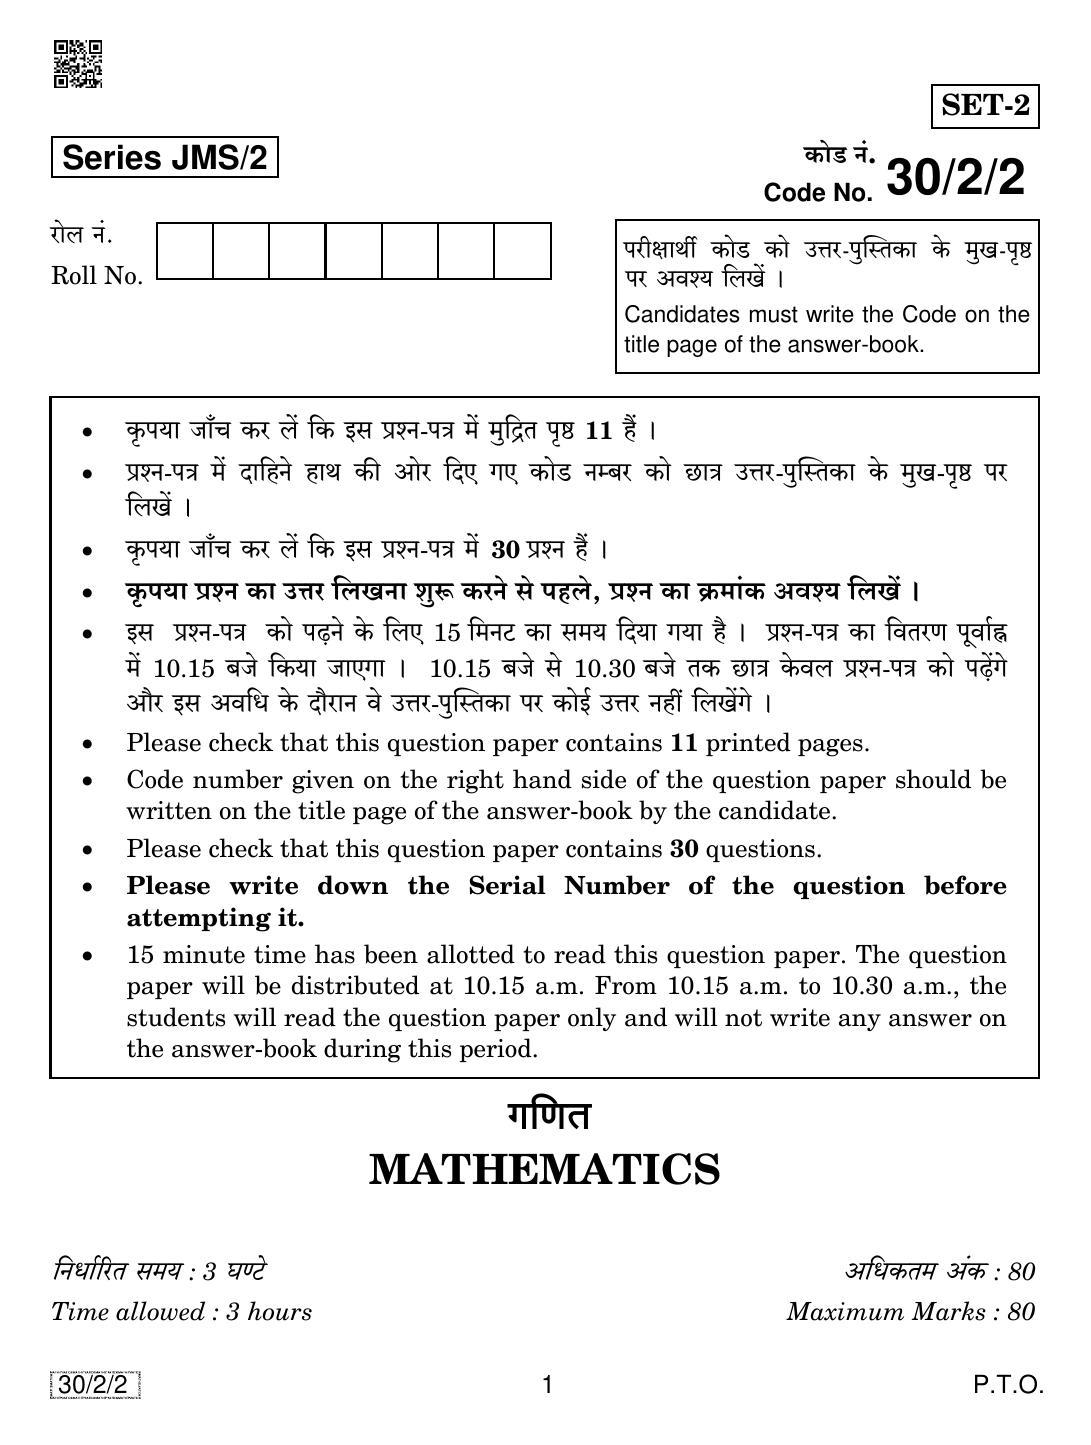 CBSE Class 10 Maths (30/2/2 - SET 2) 2019 Question Paper - Page 1